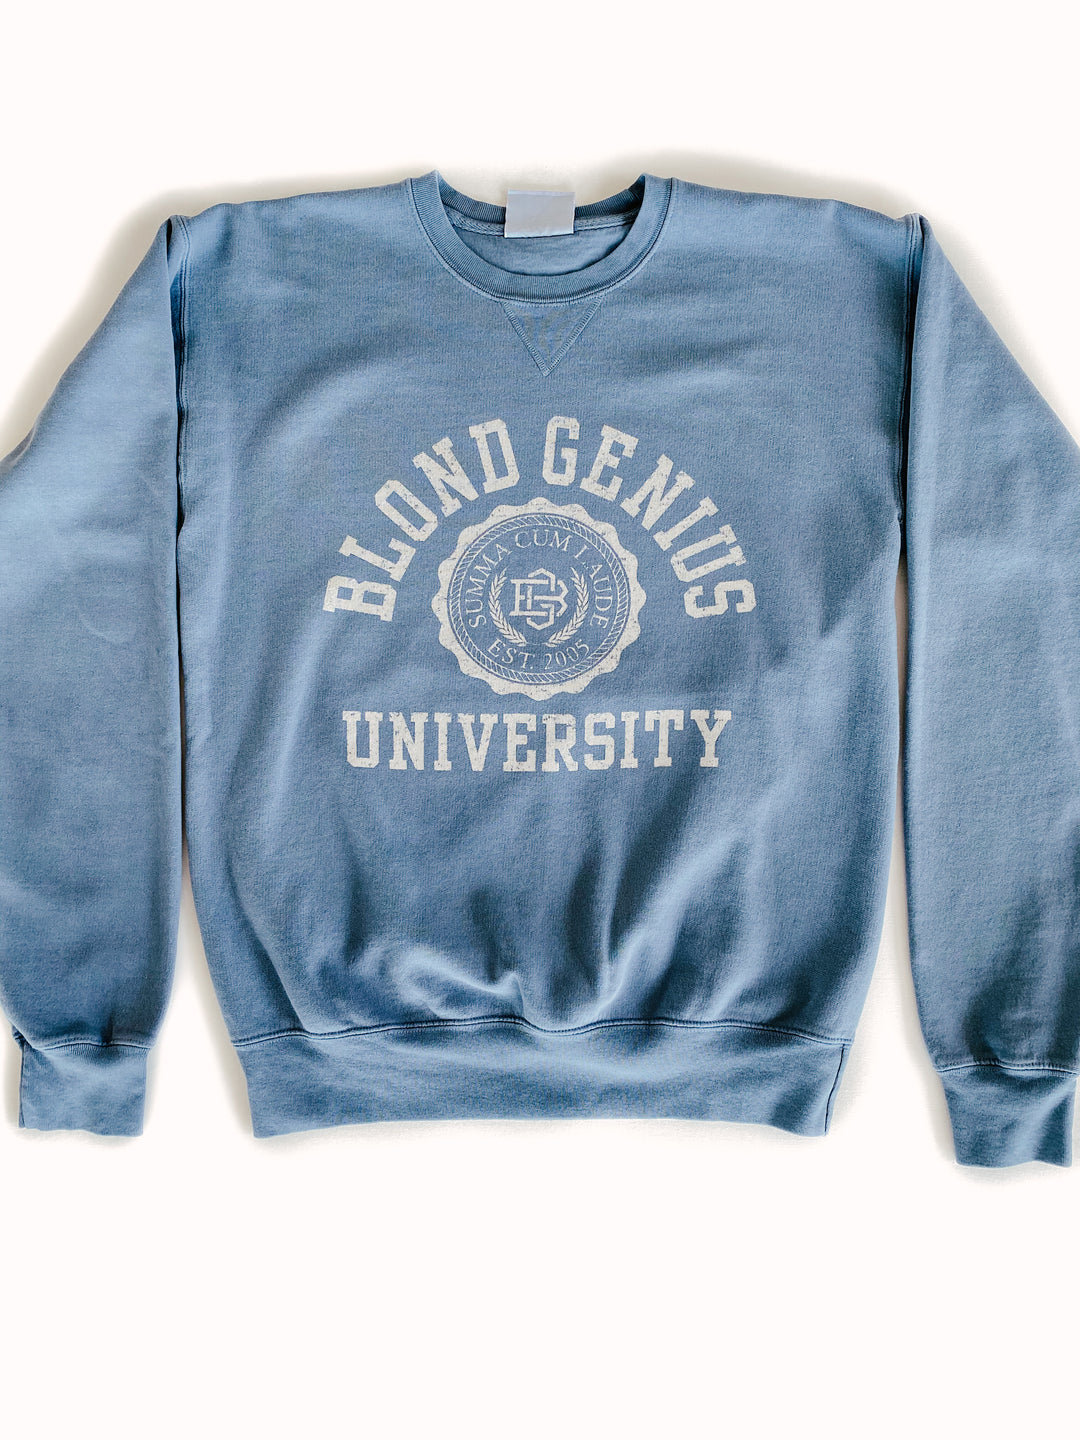 Blond Genius - Blond Genius University Sweatshirt in Blue